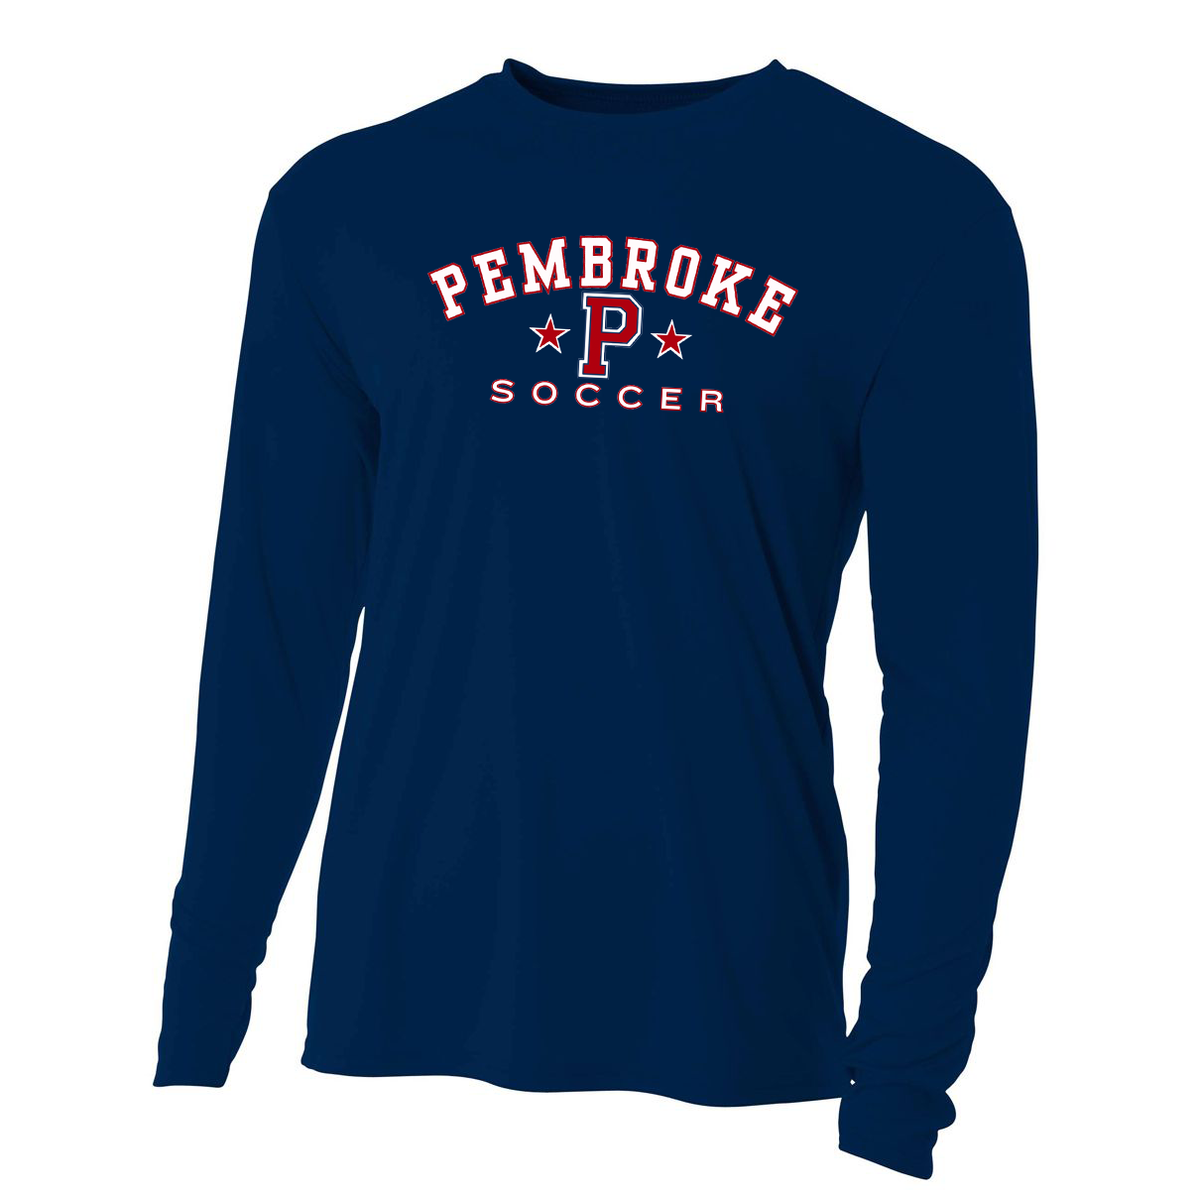 Pembroke Soccer Cooling Performance Long Sleeve Crew